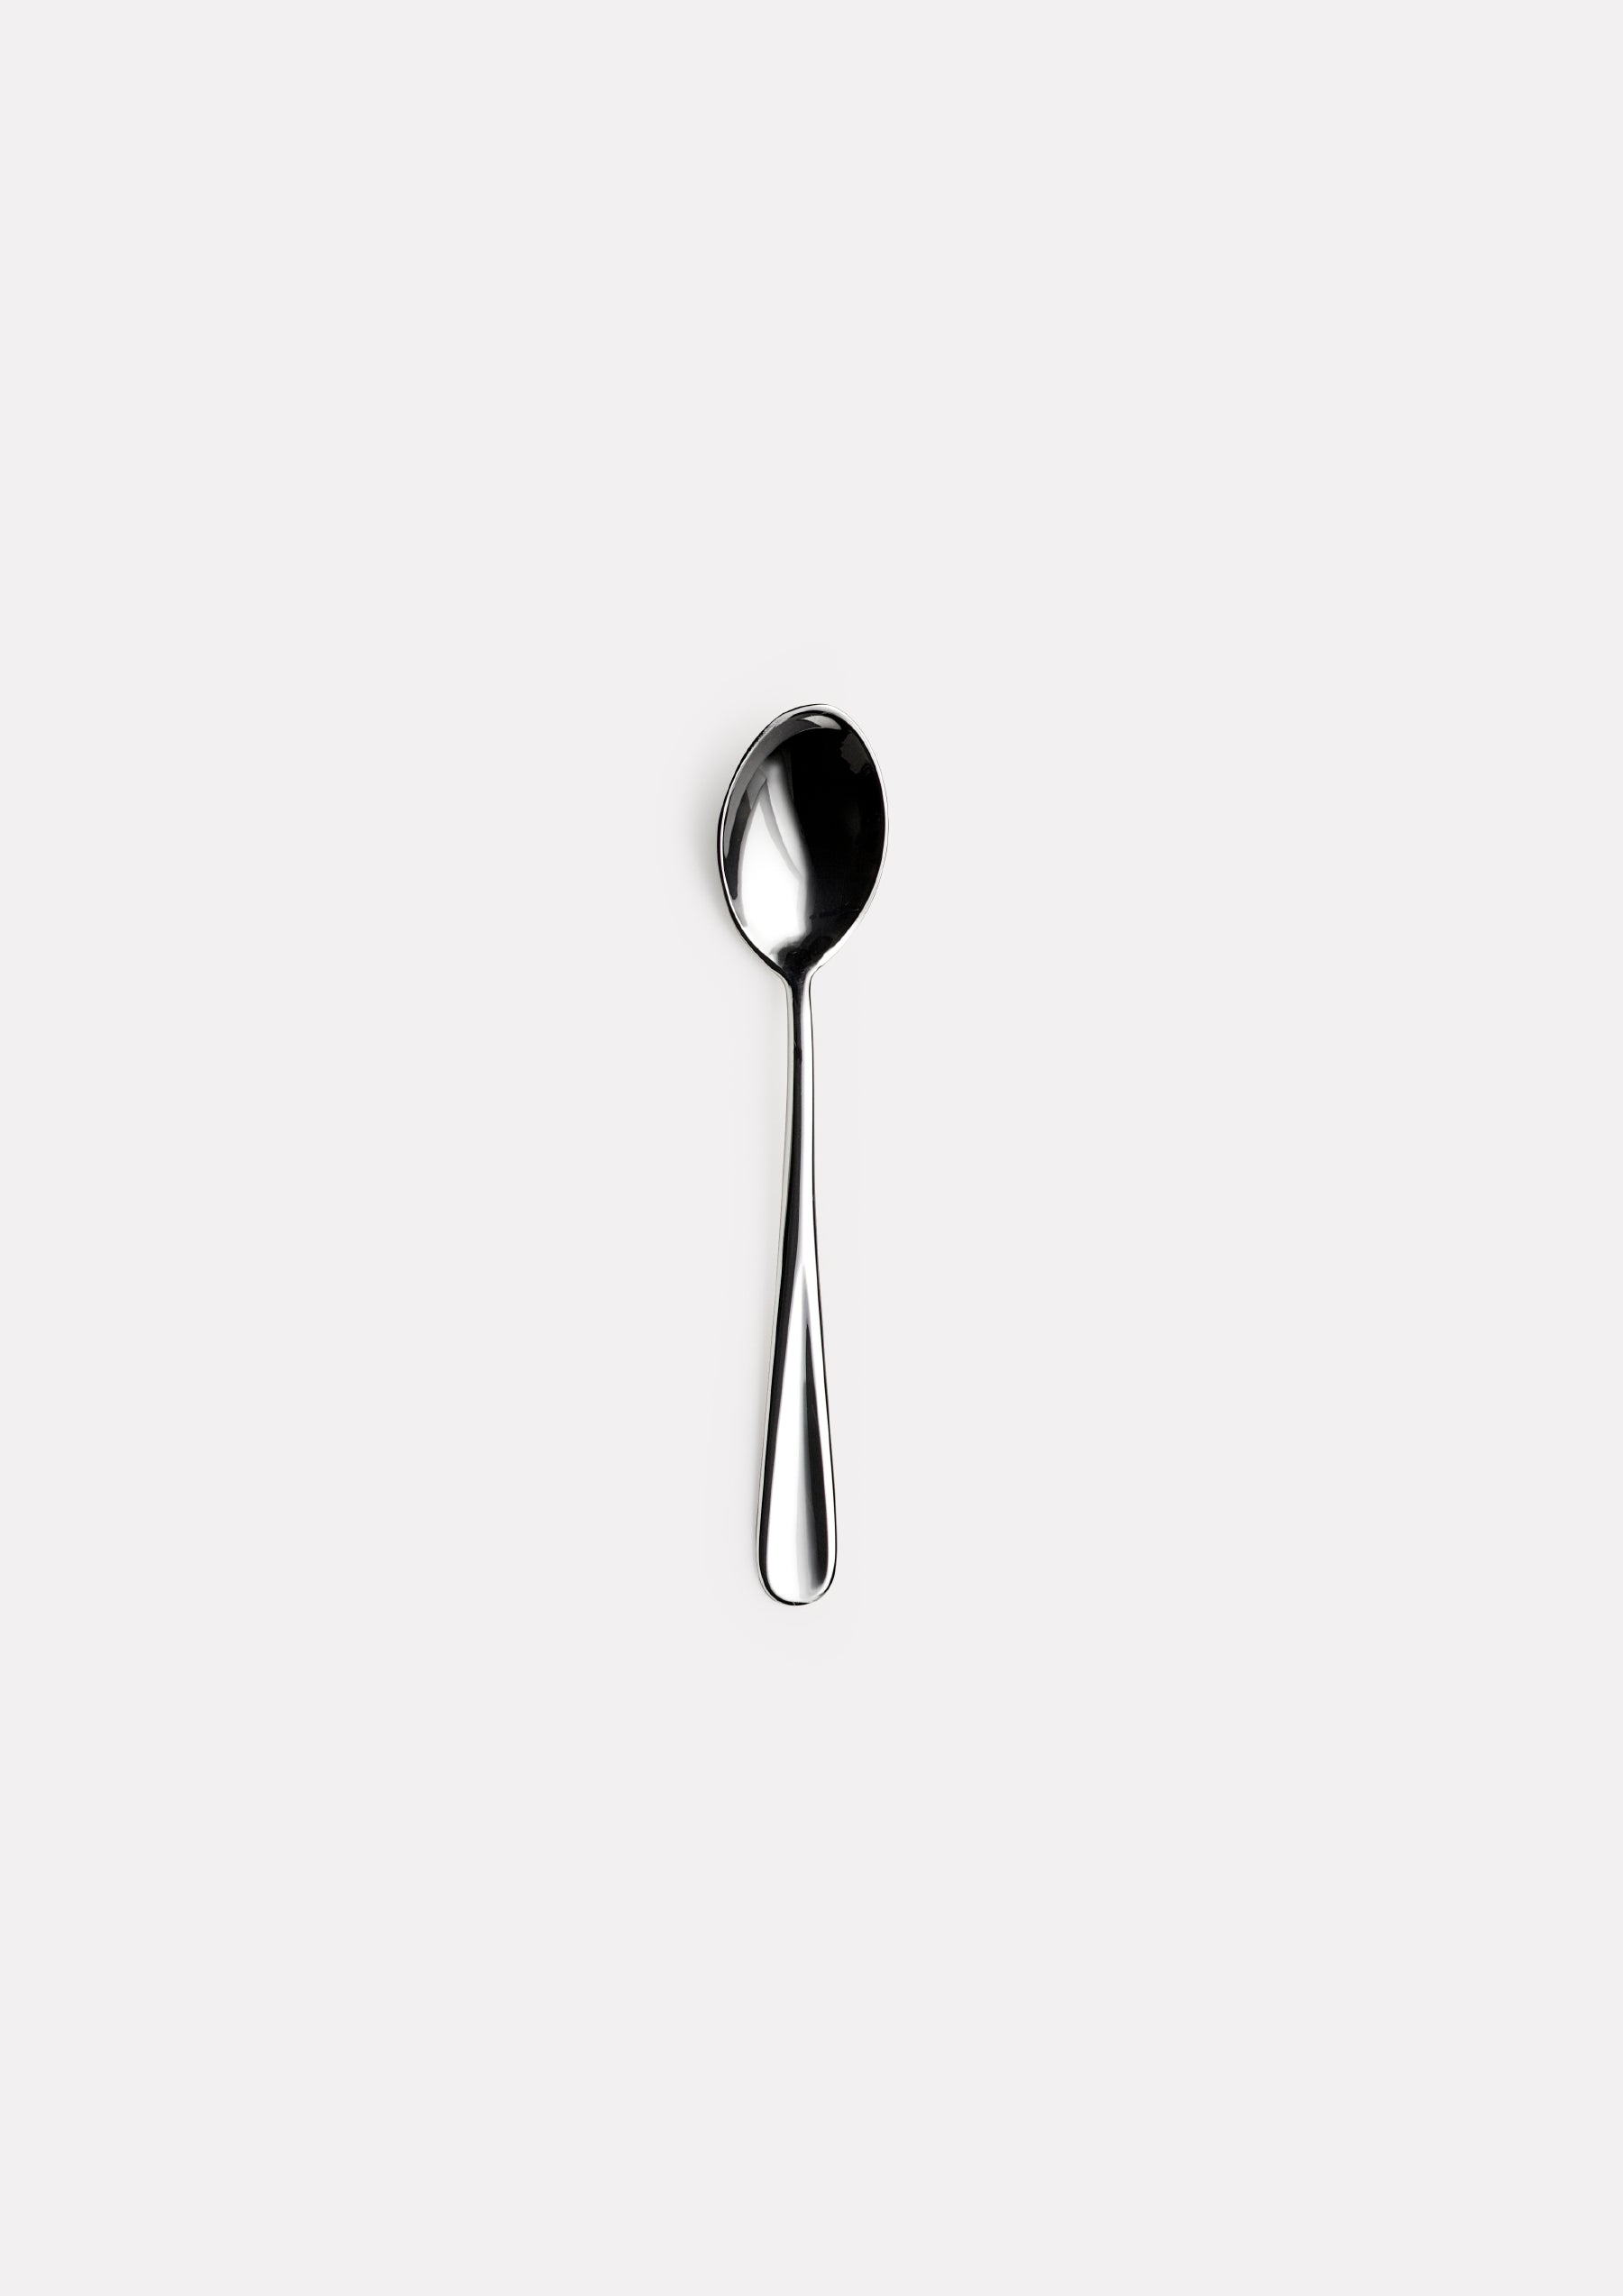 Moon coffee spoon